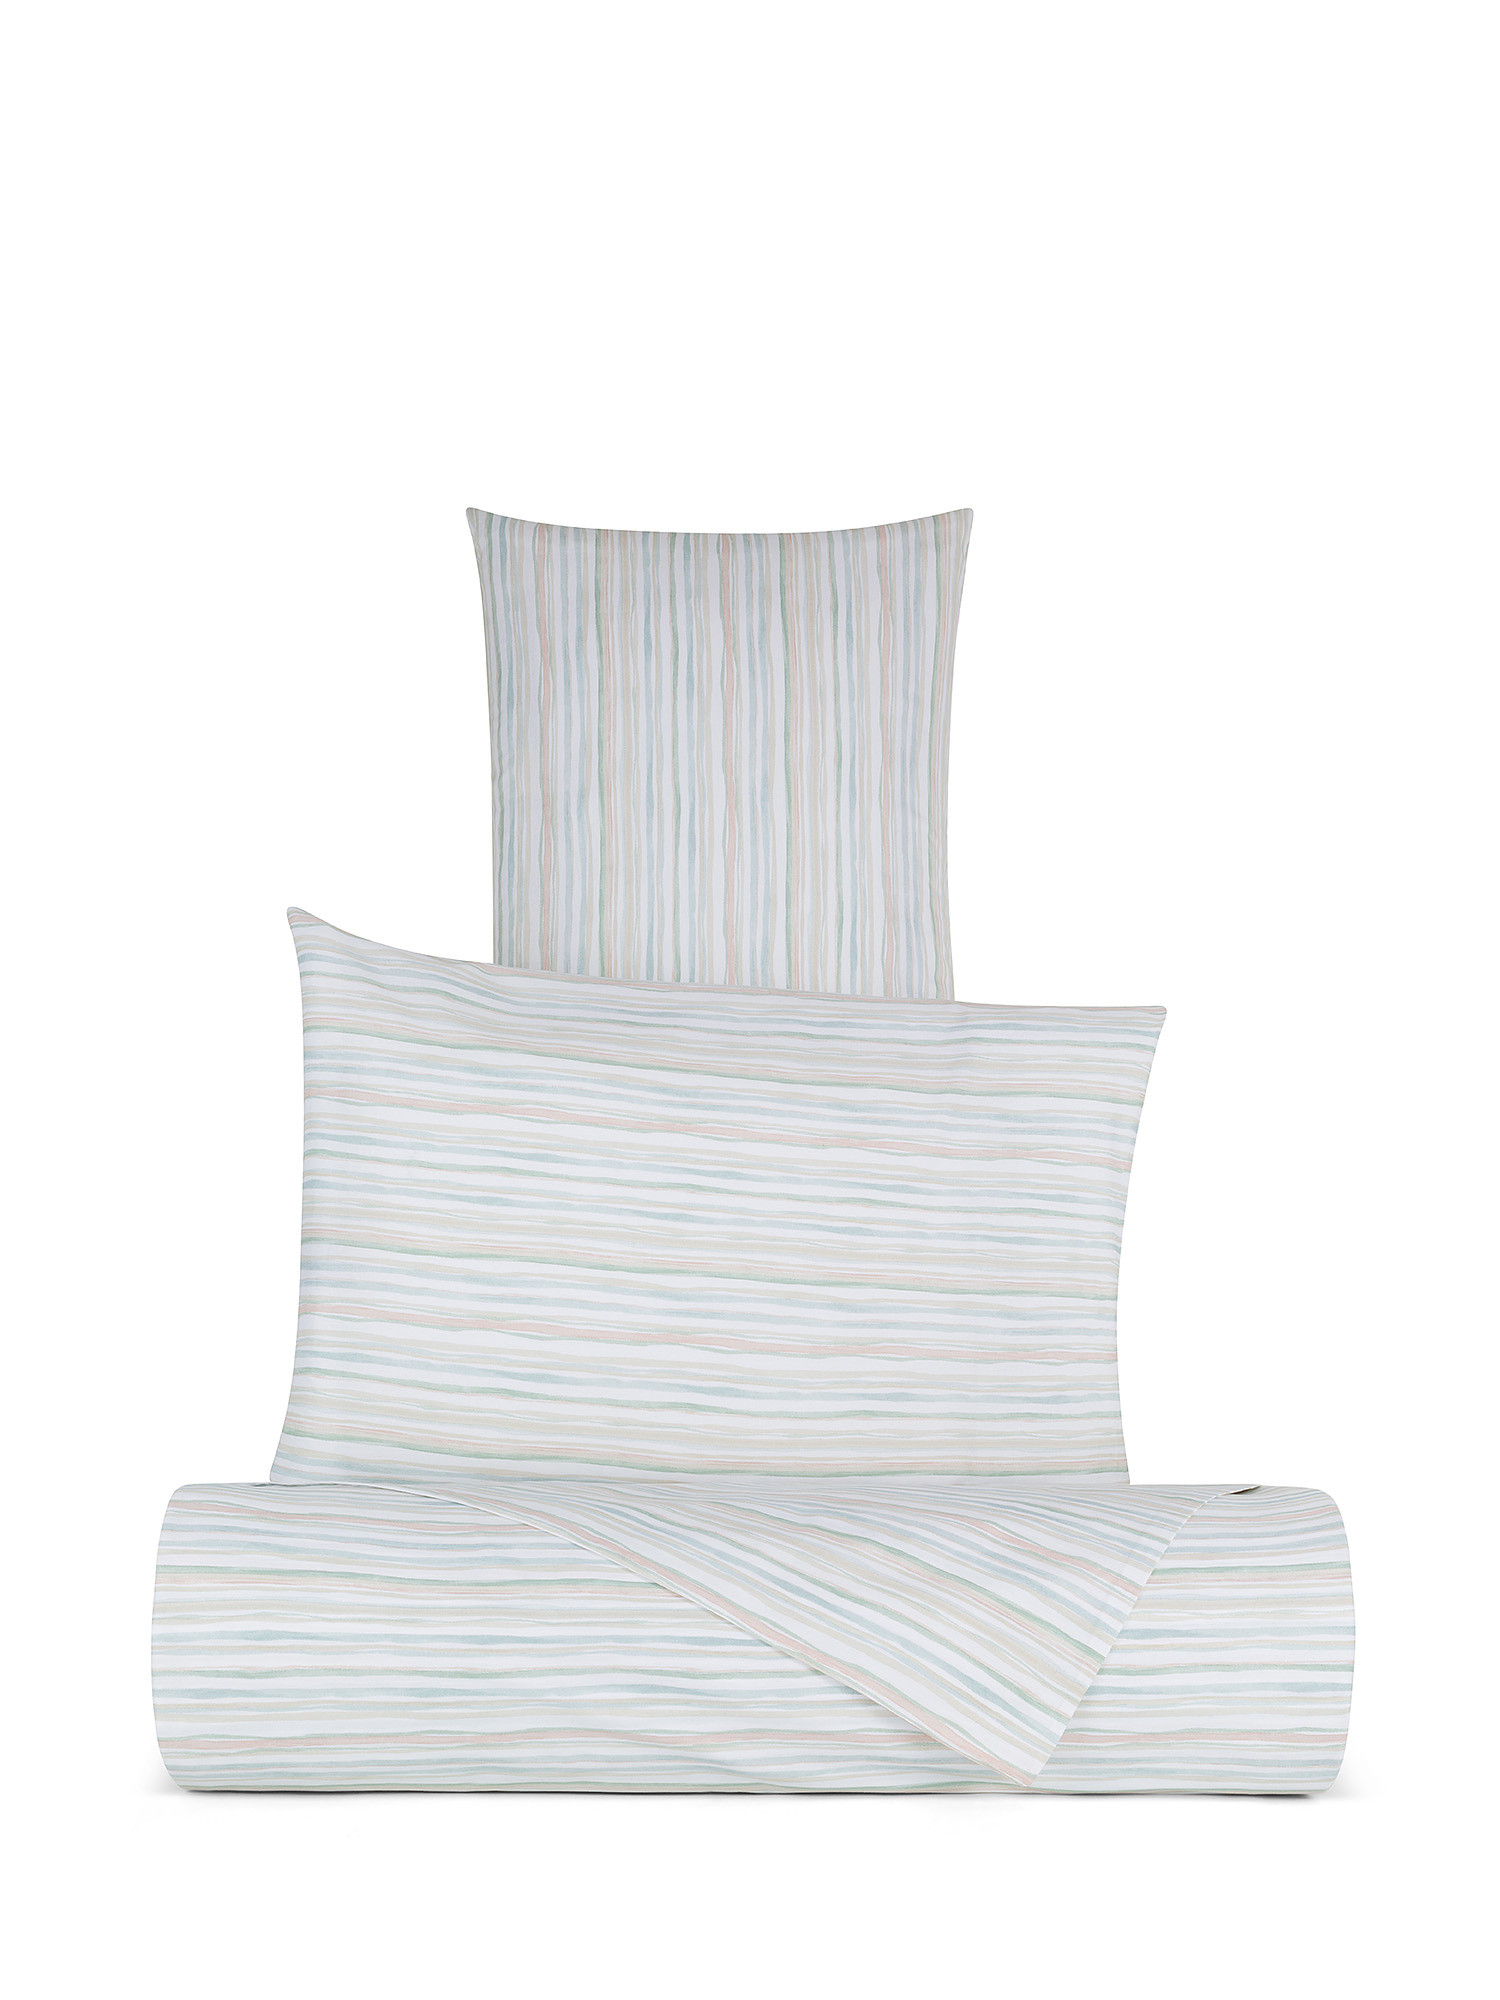 Parure lenzuolo in cotone percalle stampa righe sottili acquerello, Multicolor, large image number 0